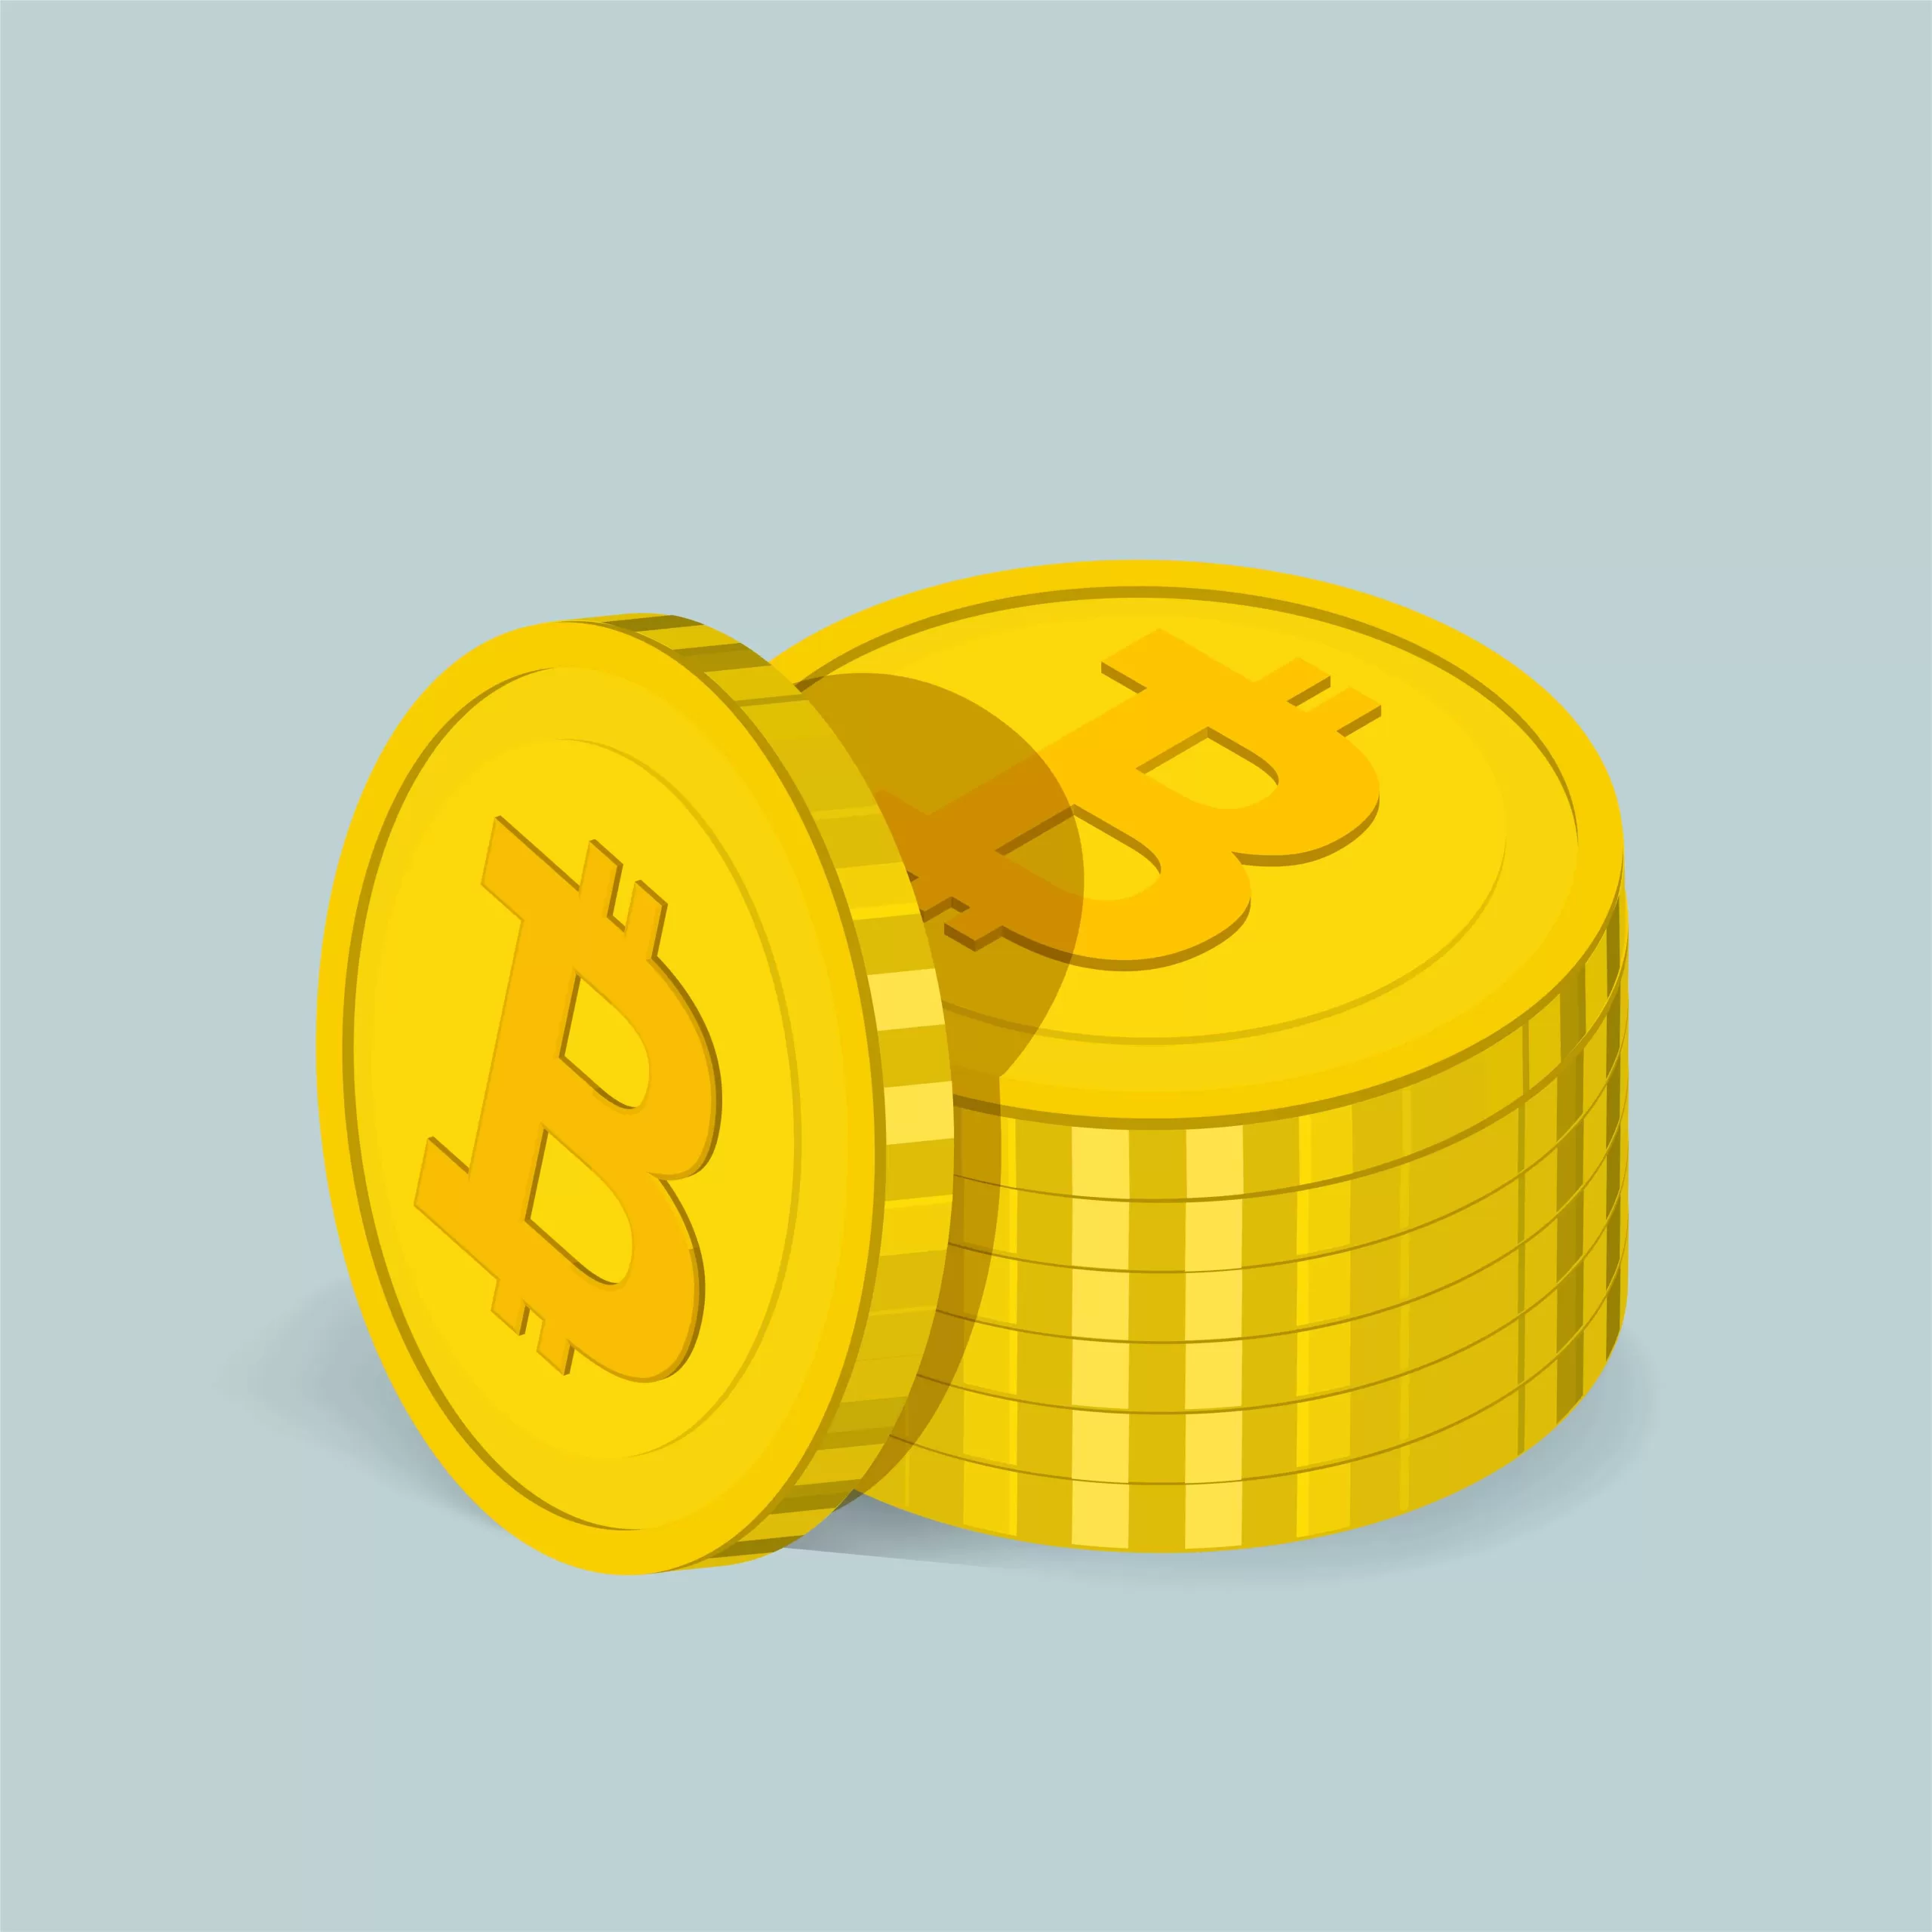 Bitcoin image-Vanguard's Bitcoin ETF